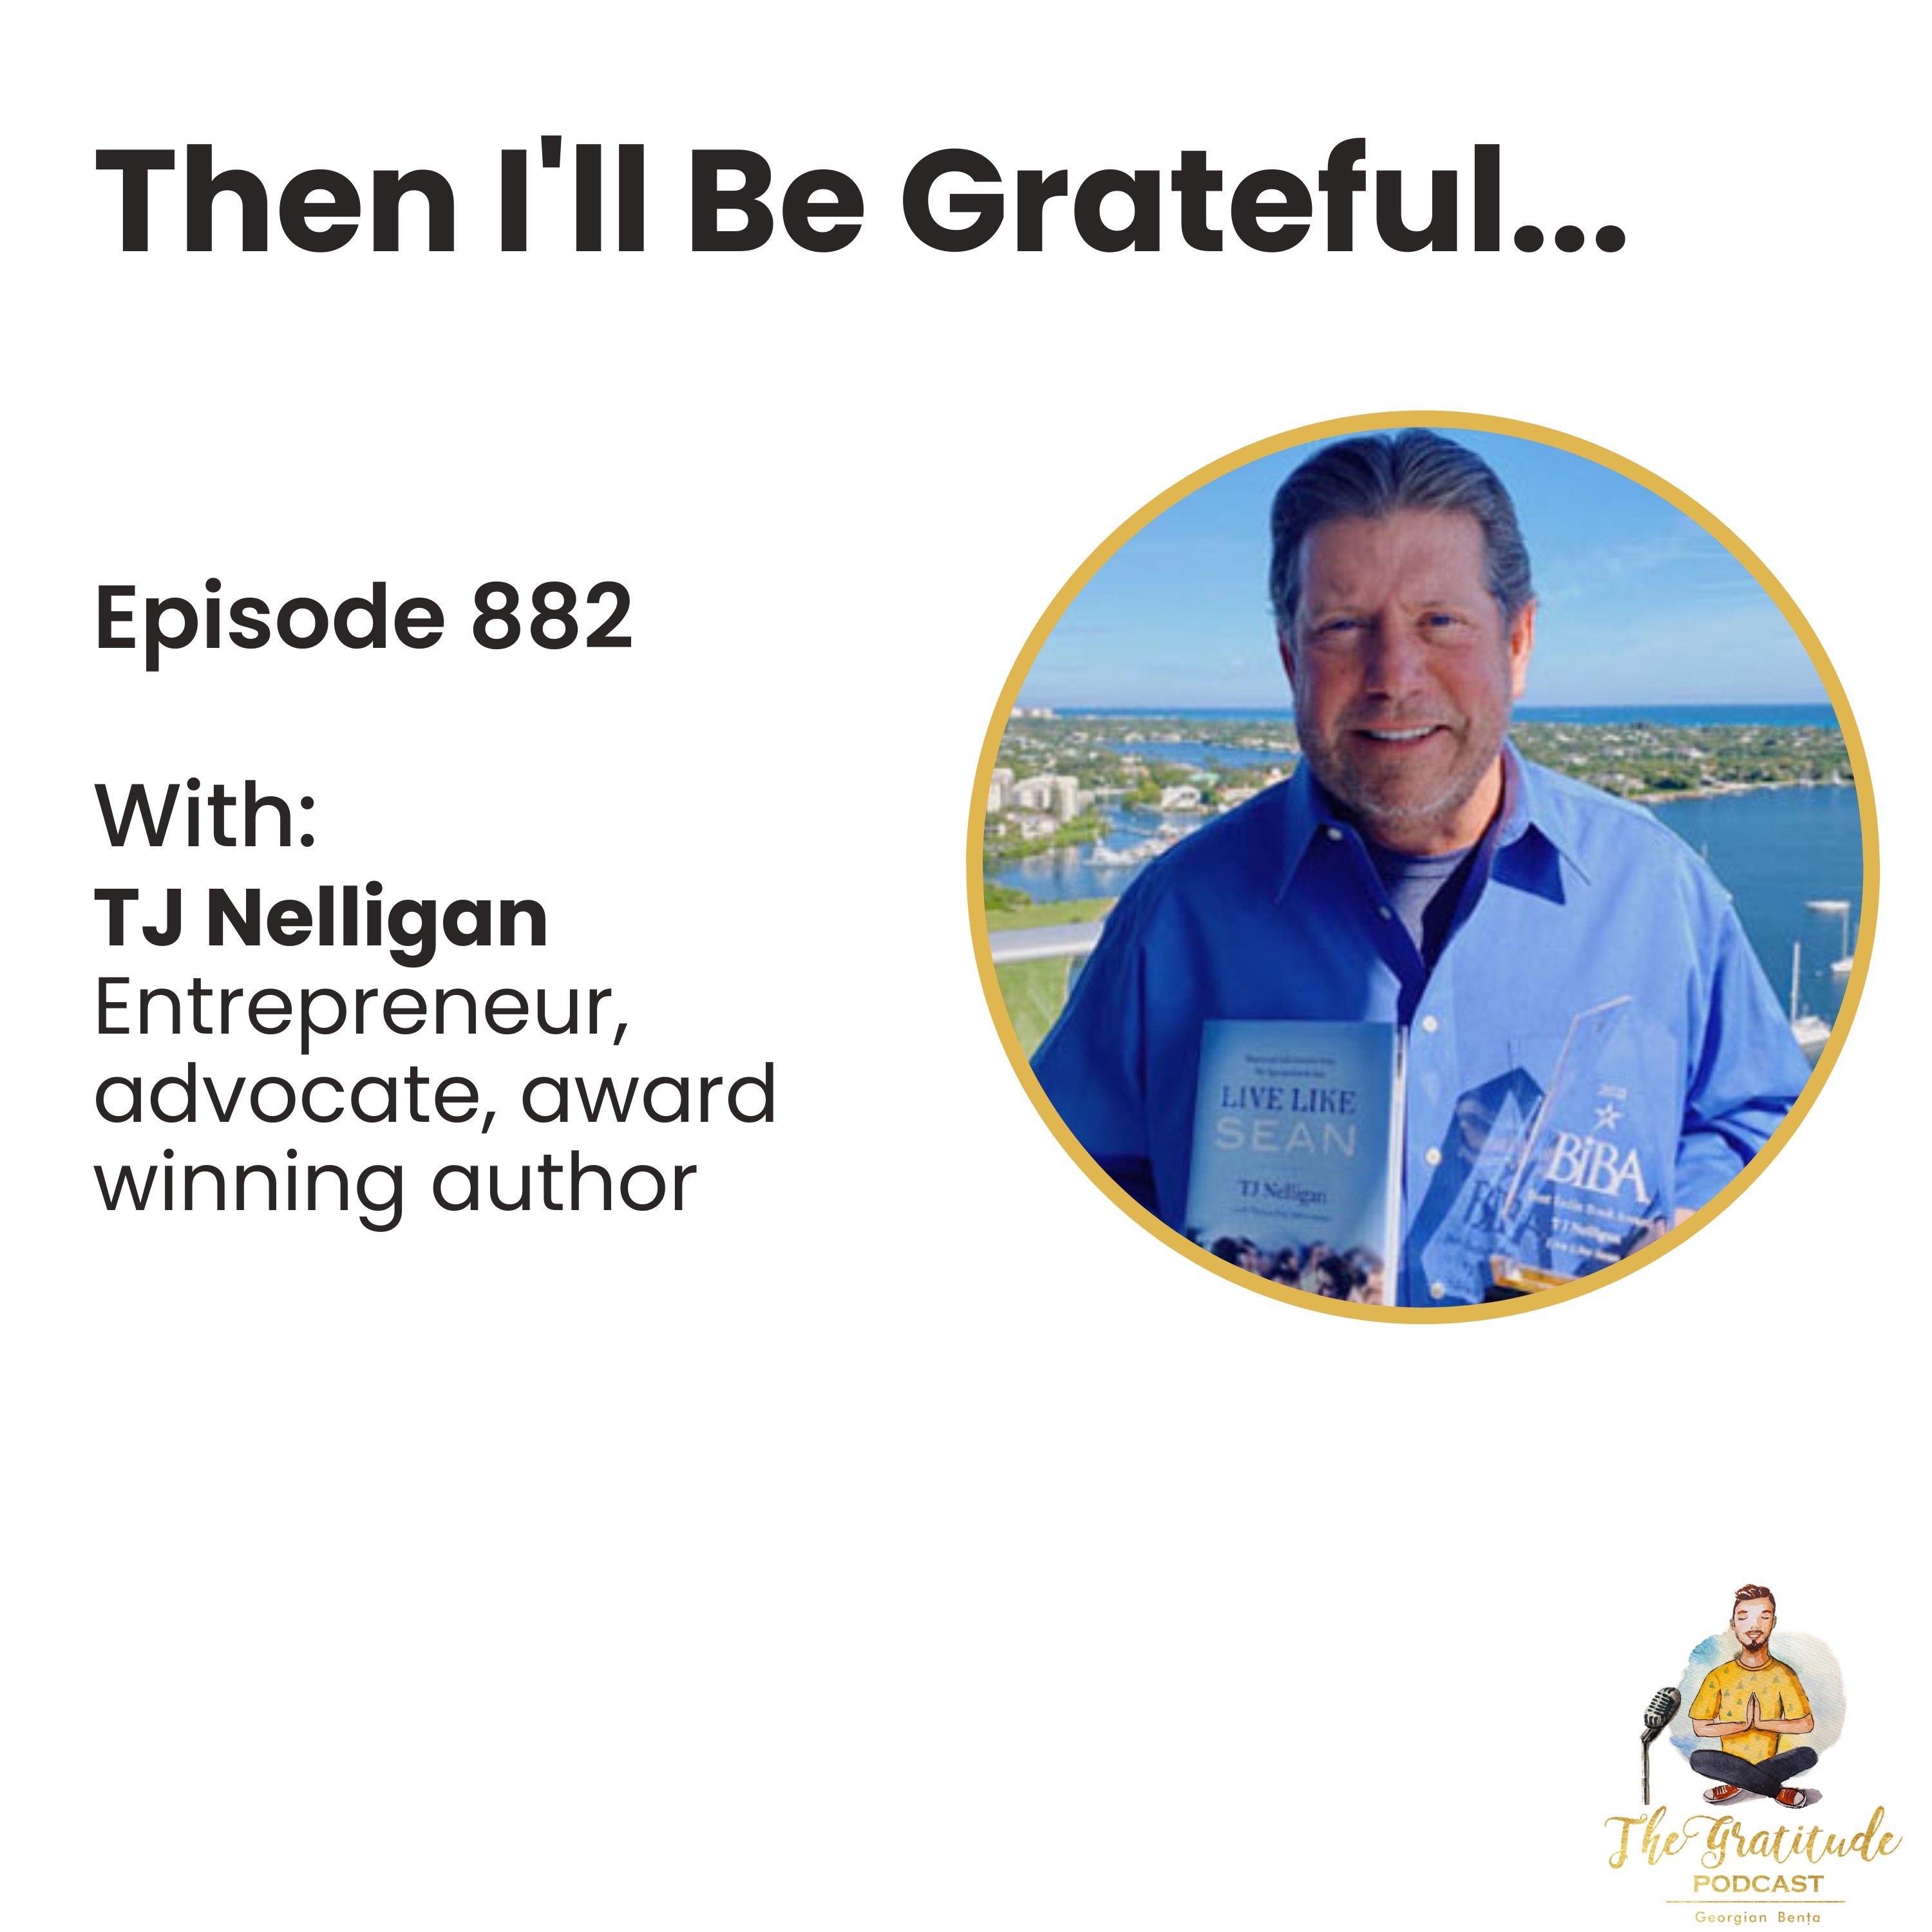 Then I’ll Be Grateful... - TJ Nelligan (ep. 882)